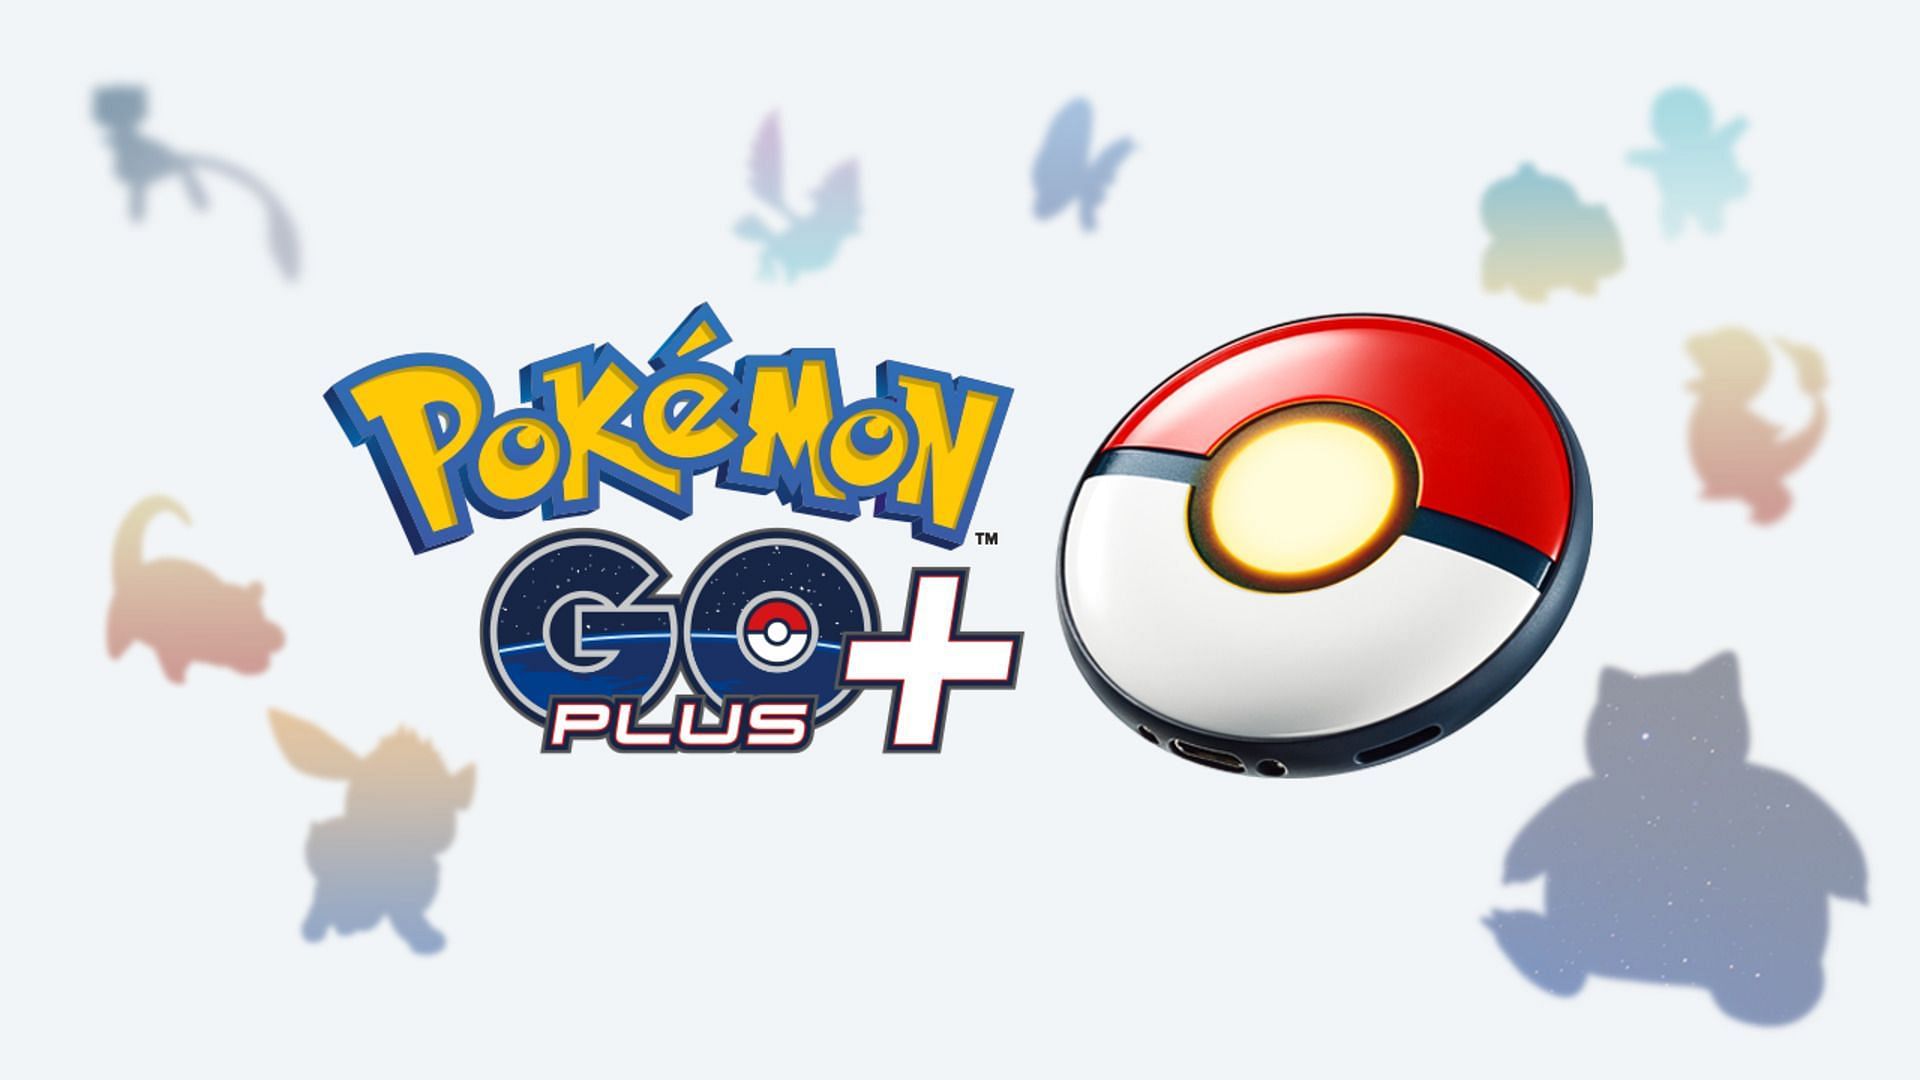 Official artwork for the Pokemon GO+ Plus accessory (Image via The Pokemon Company)